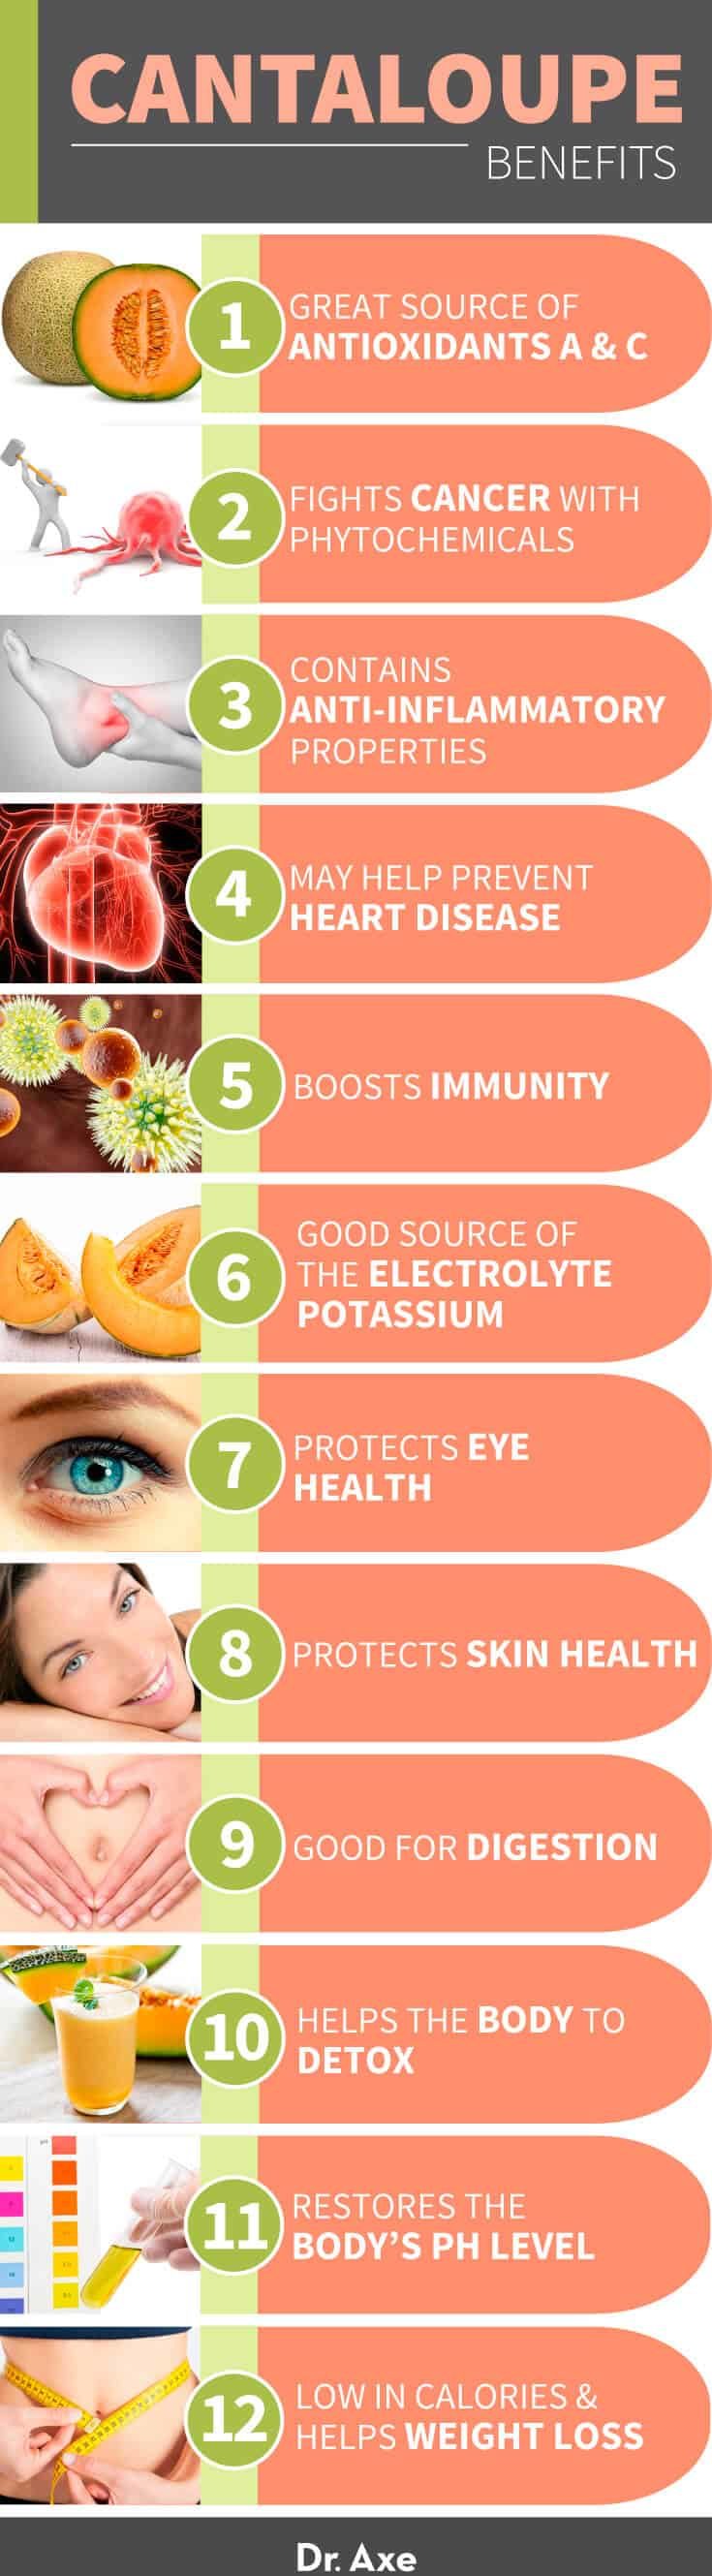 Cantaloupe Benefits